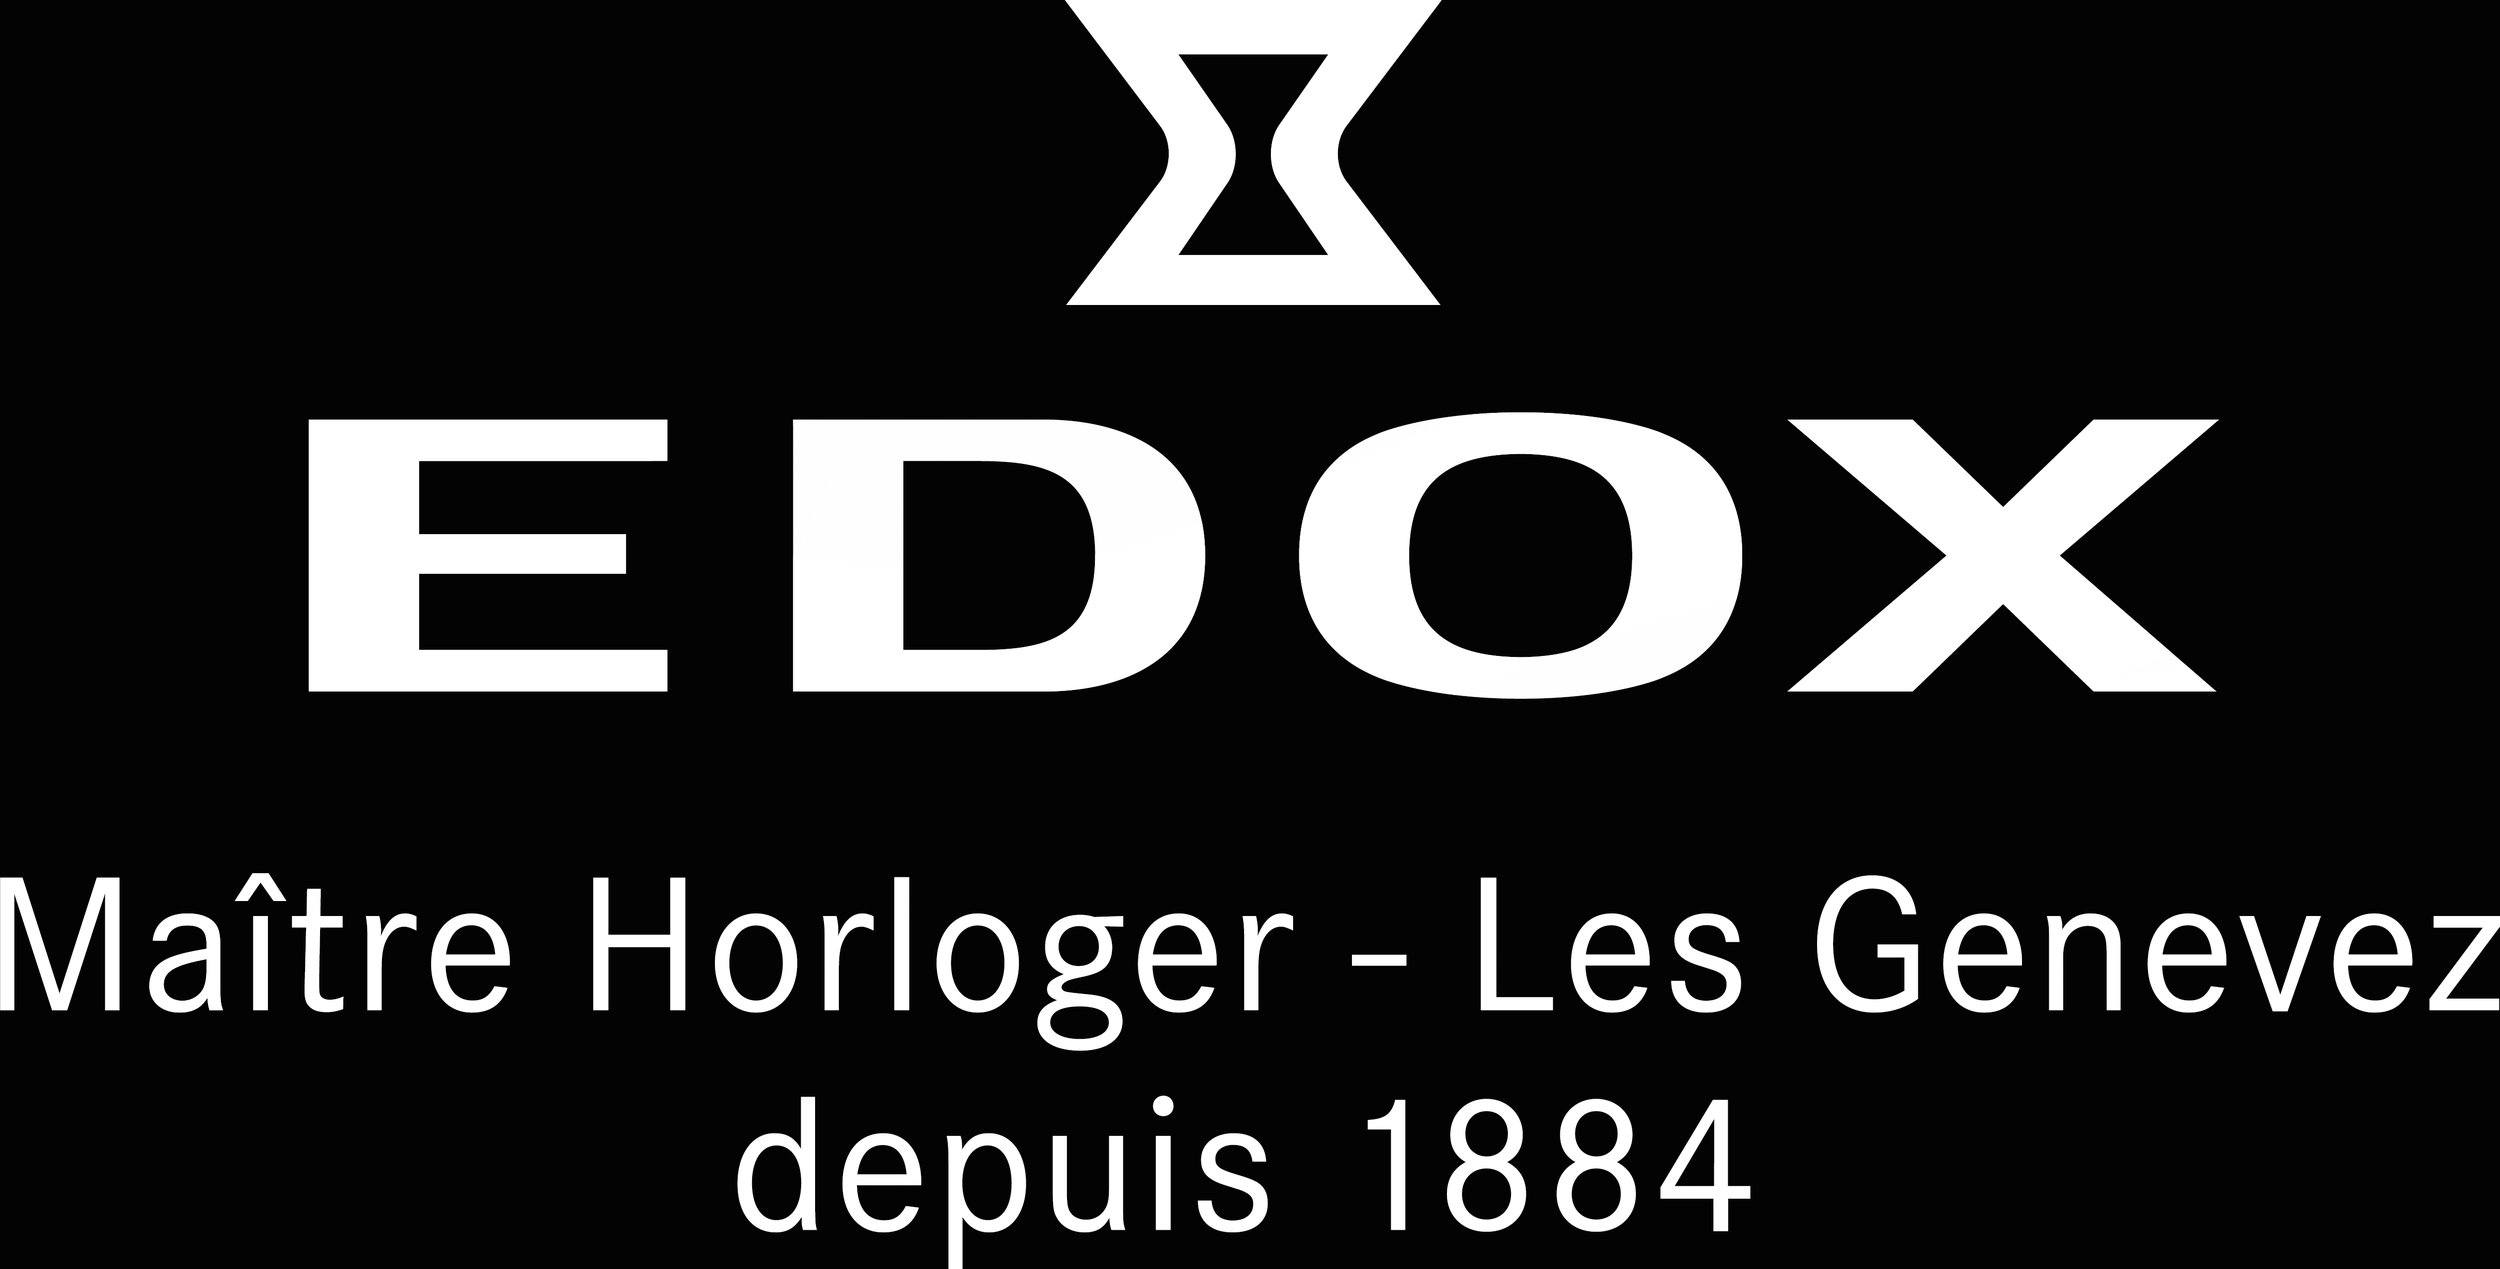 EDOX logo w410X208mm (WHITE2).jpg